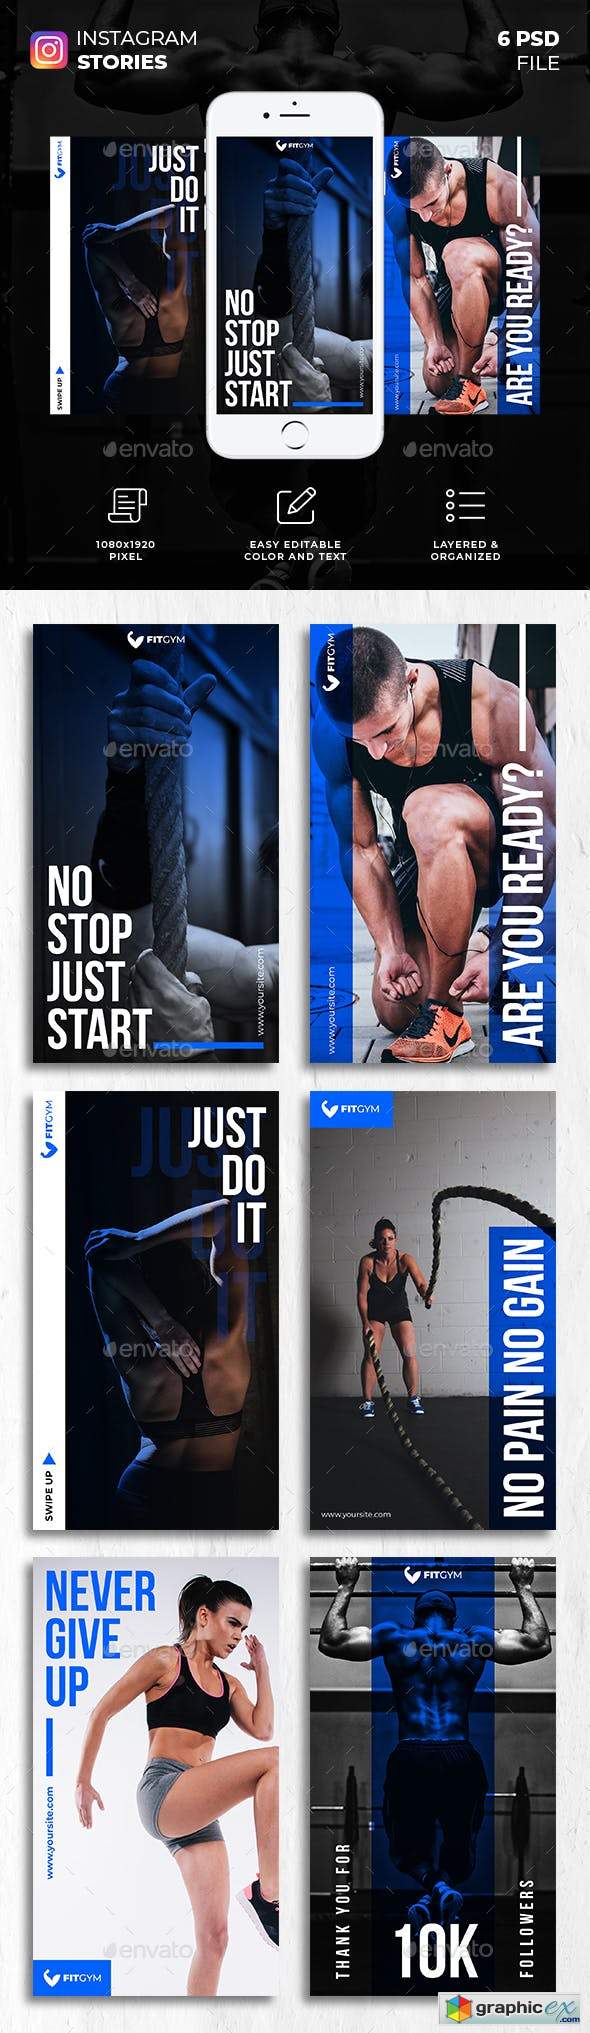 Fitness Gym Instagram Stories